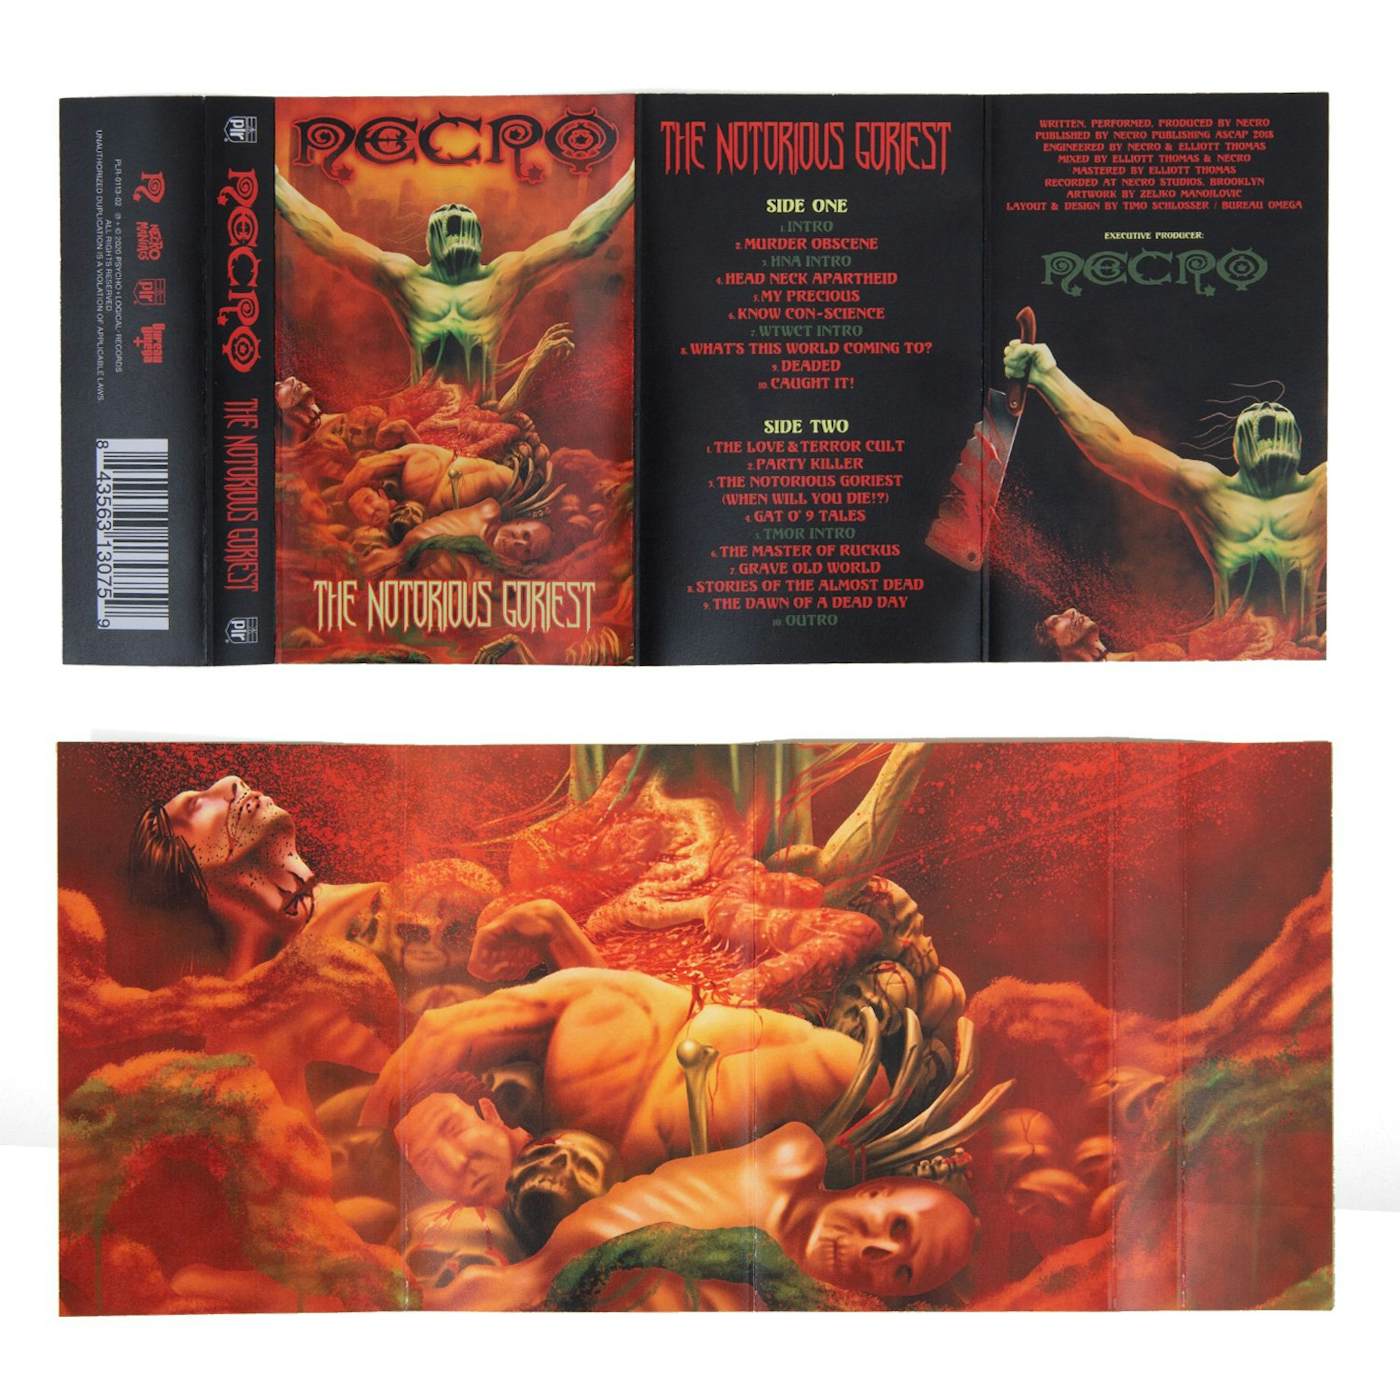 Necro "The Notorious Goriest" Cassette